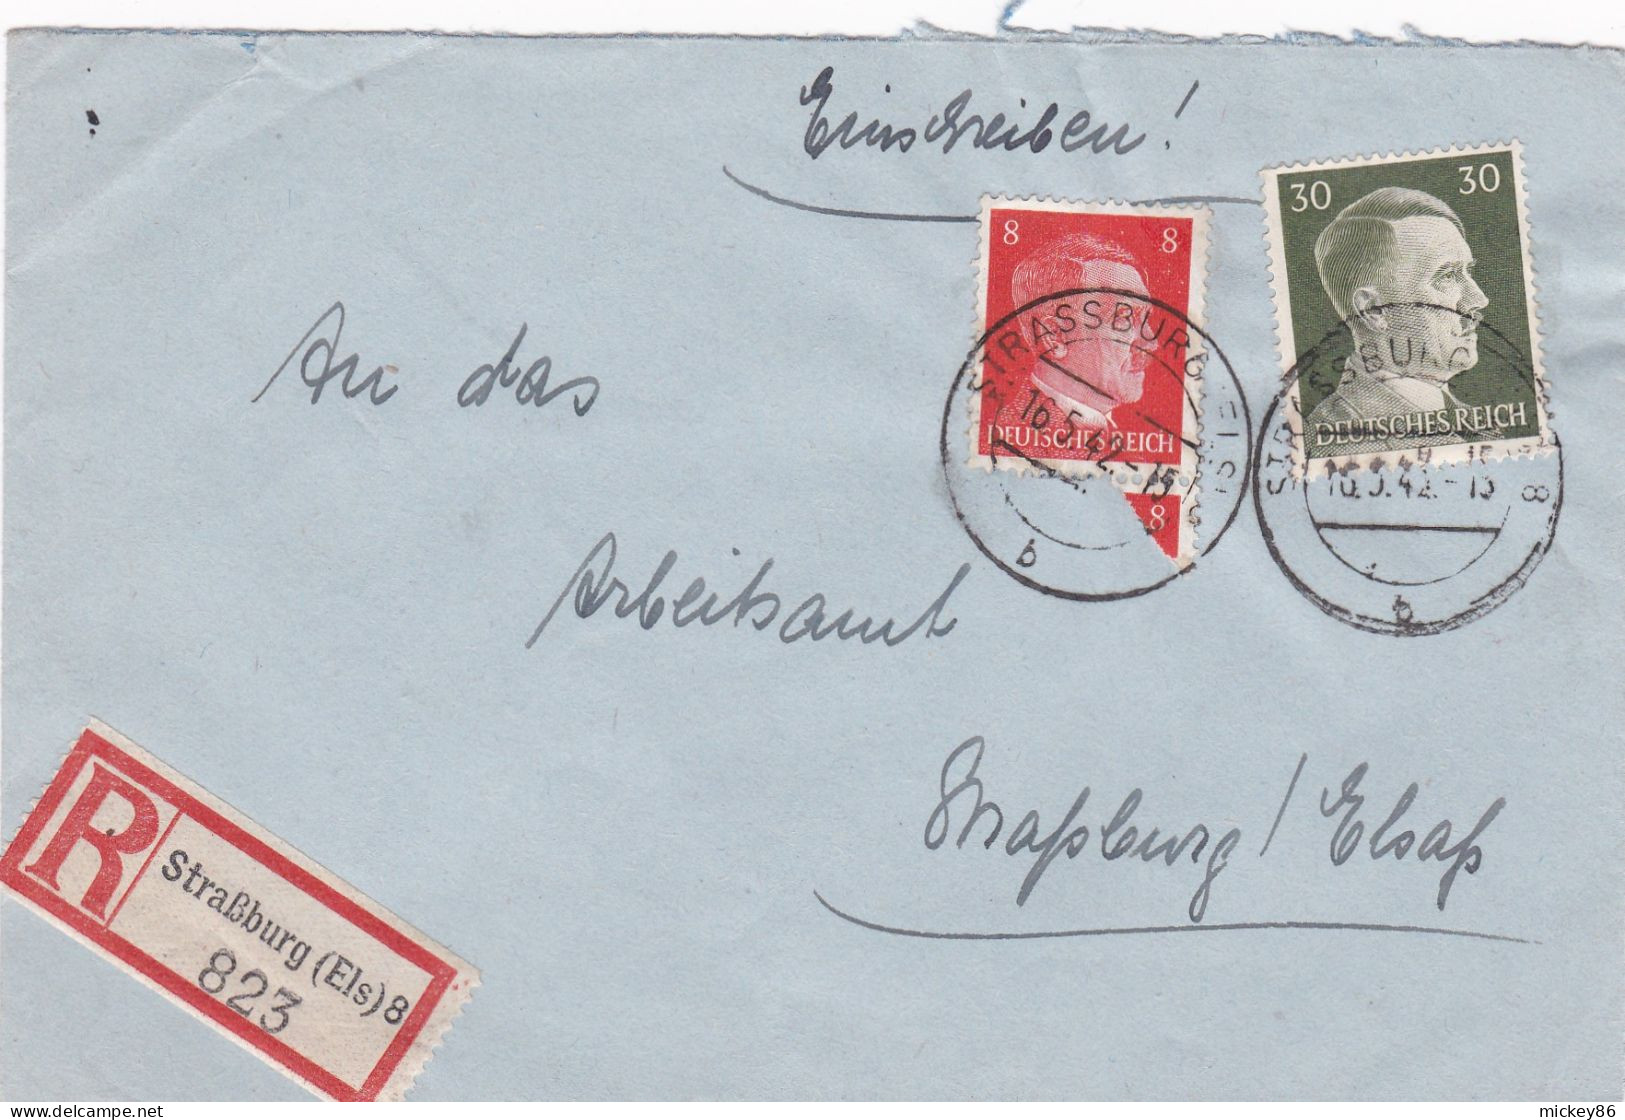 1942-Lettre Recommandée STRASBOURG-Els 8  Pour STRASBOURG..timbres Deutsches Reich--cachet 16-5-42 - 1921-1960: Periodo Moderno